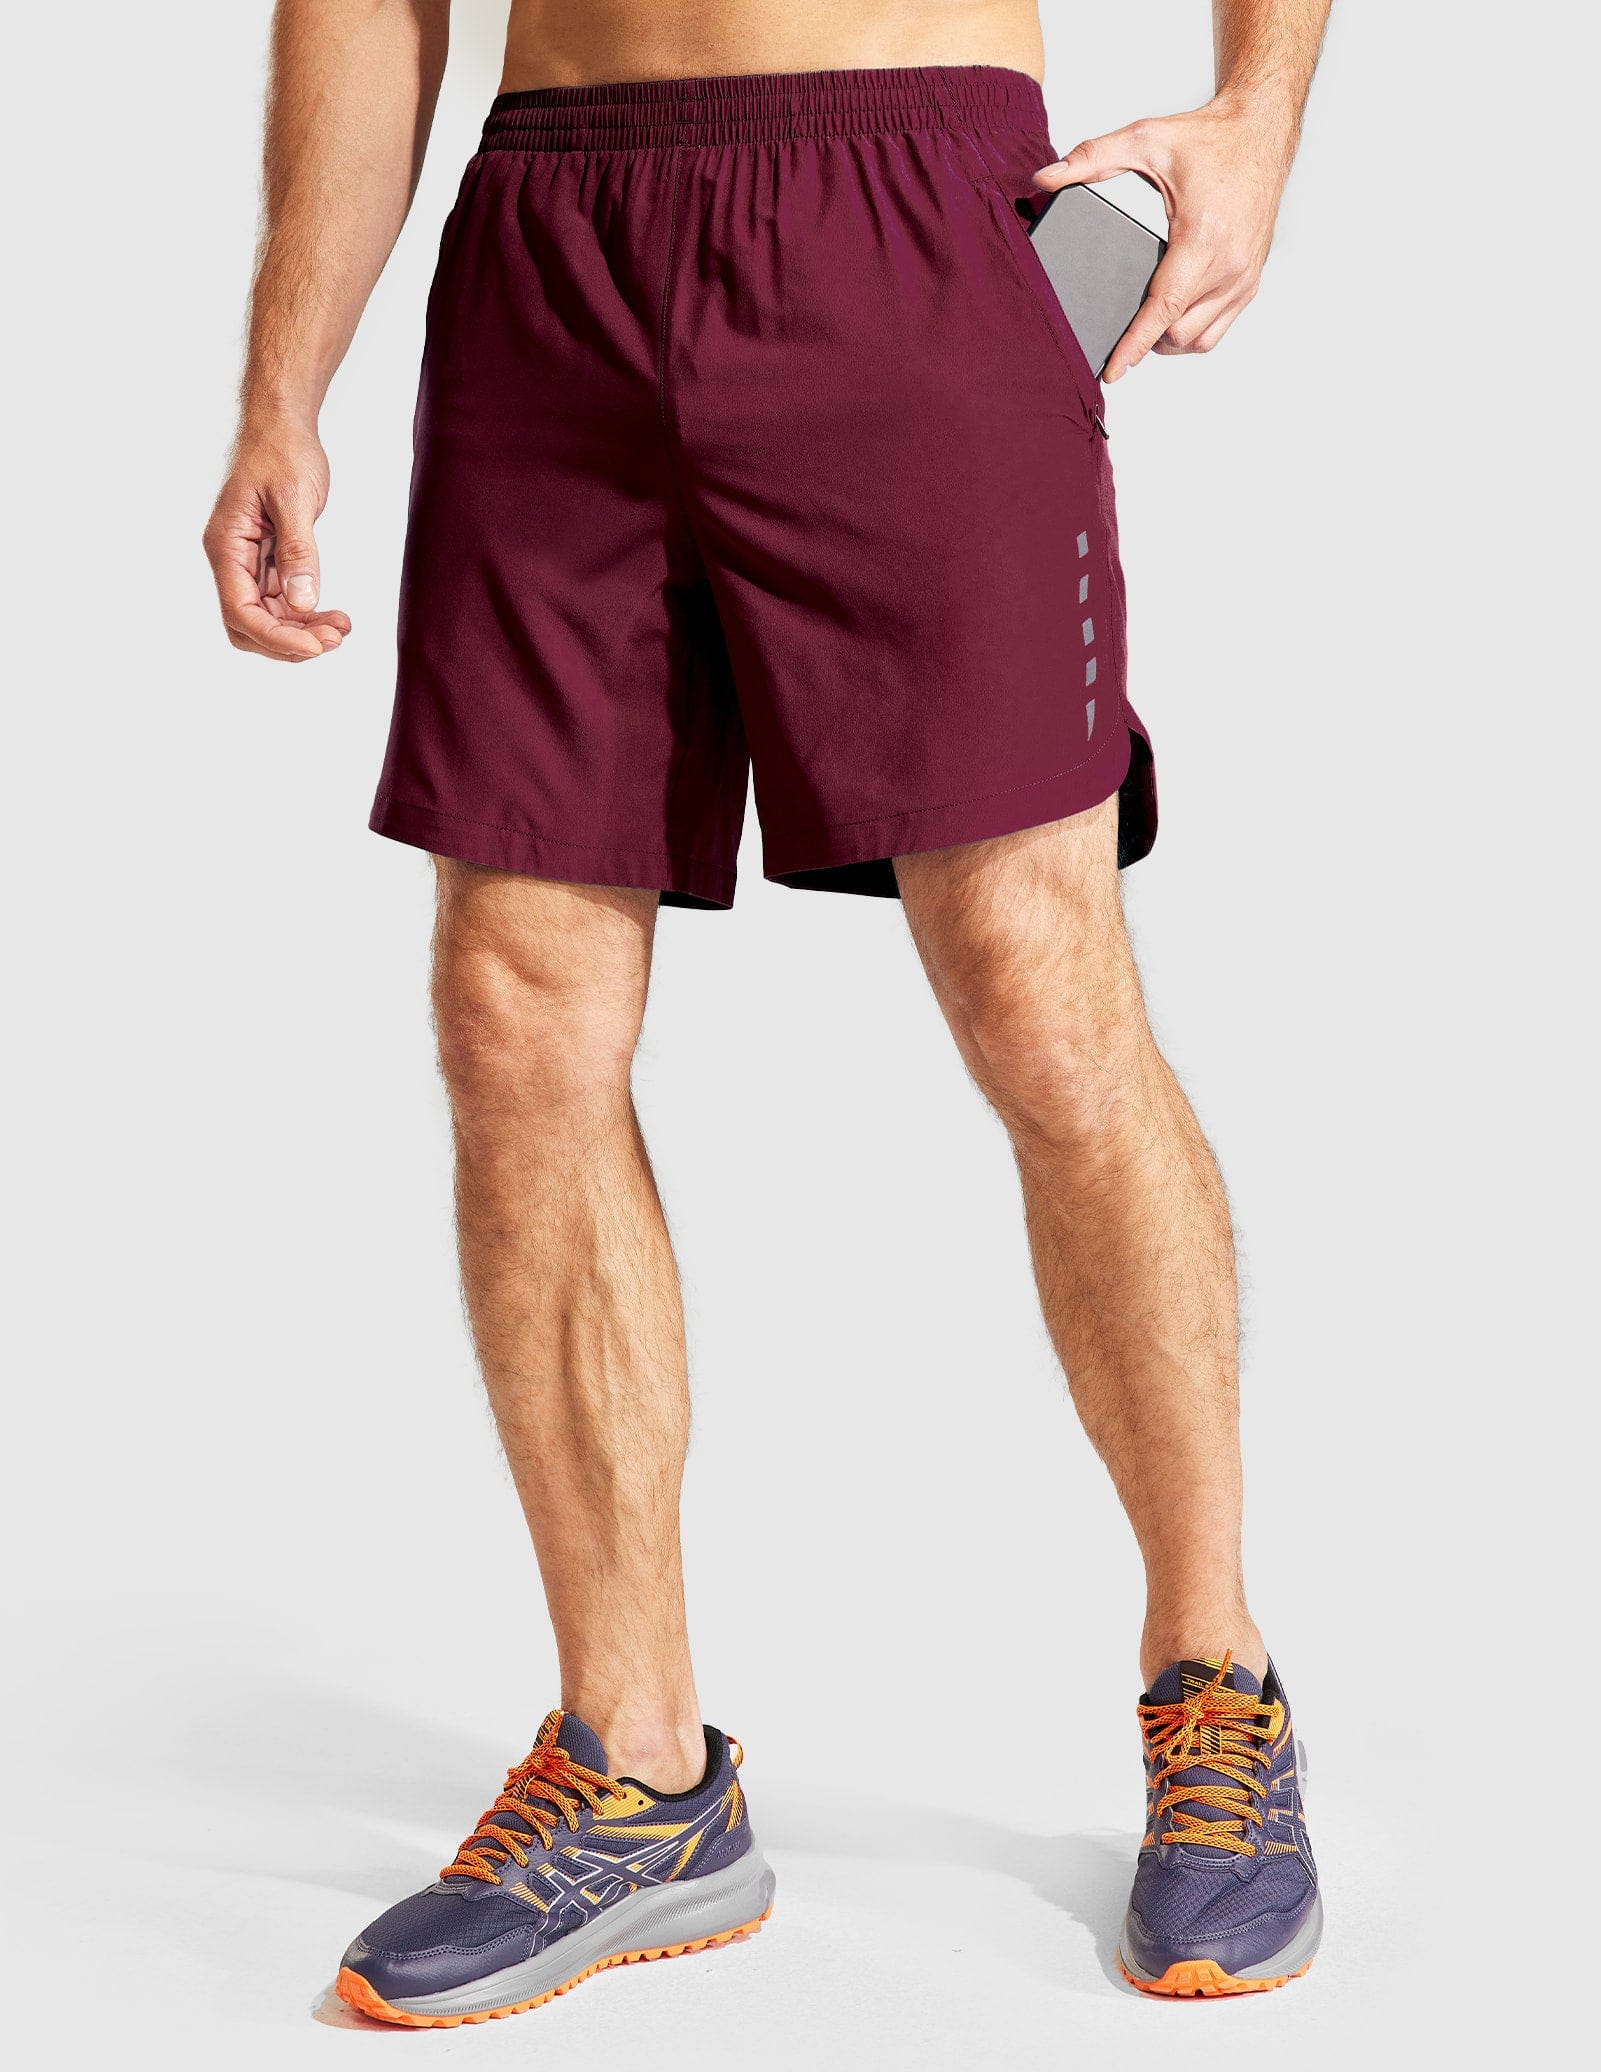 Neleus Men's 7 inch Running Shorts Lightweight Workout Shorts with Pockets